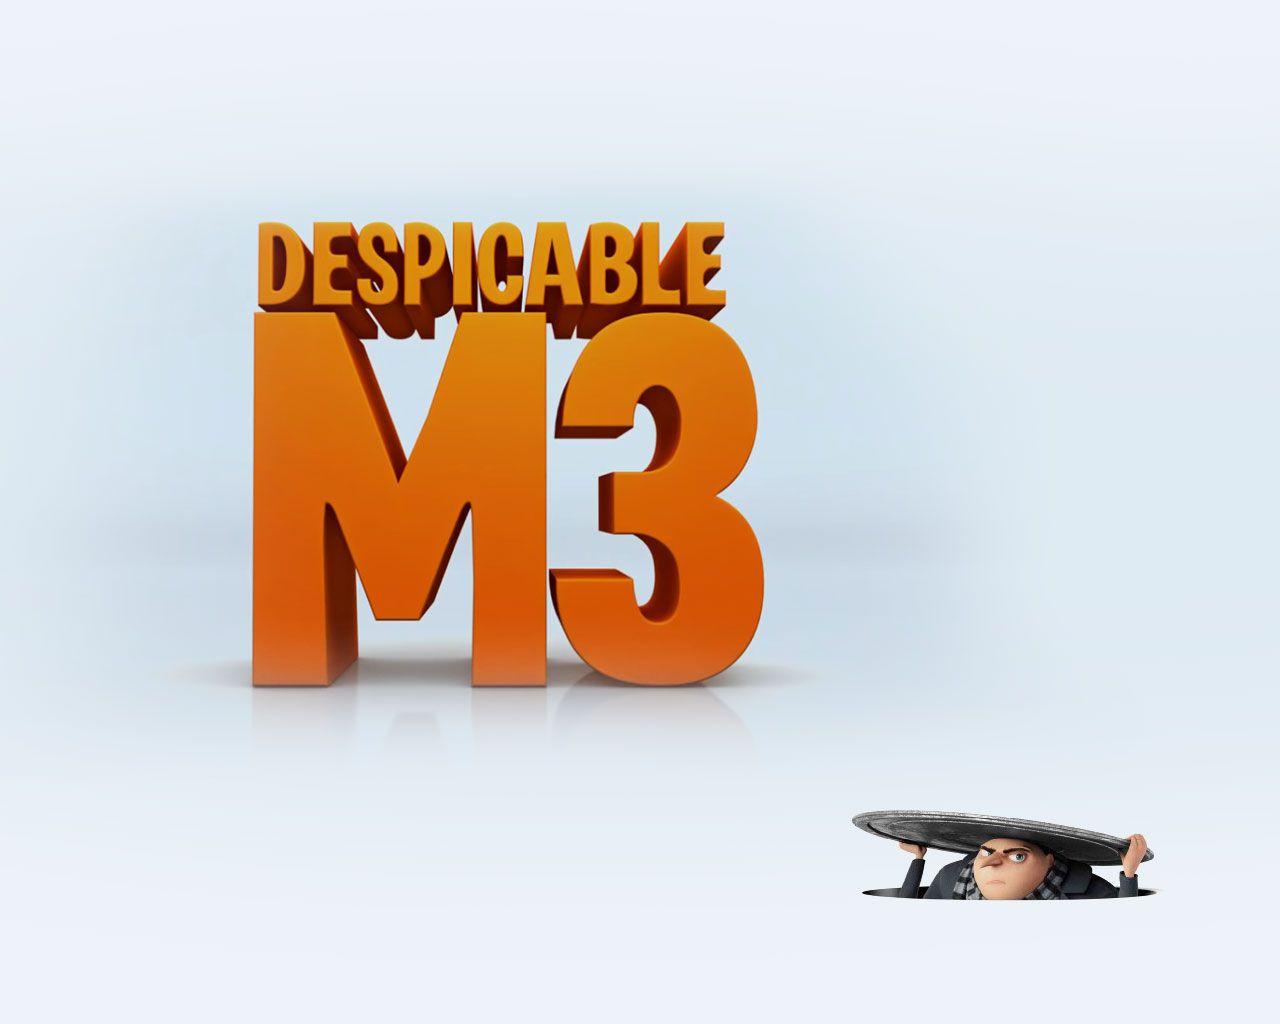 Movie Despicable Me 3 wallpaper Desktop, Phone, Tablet